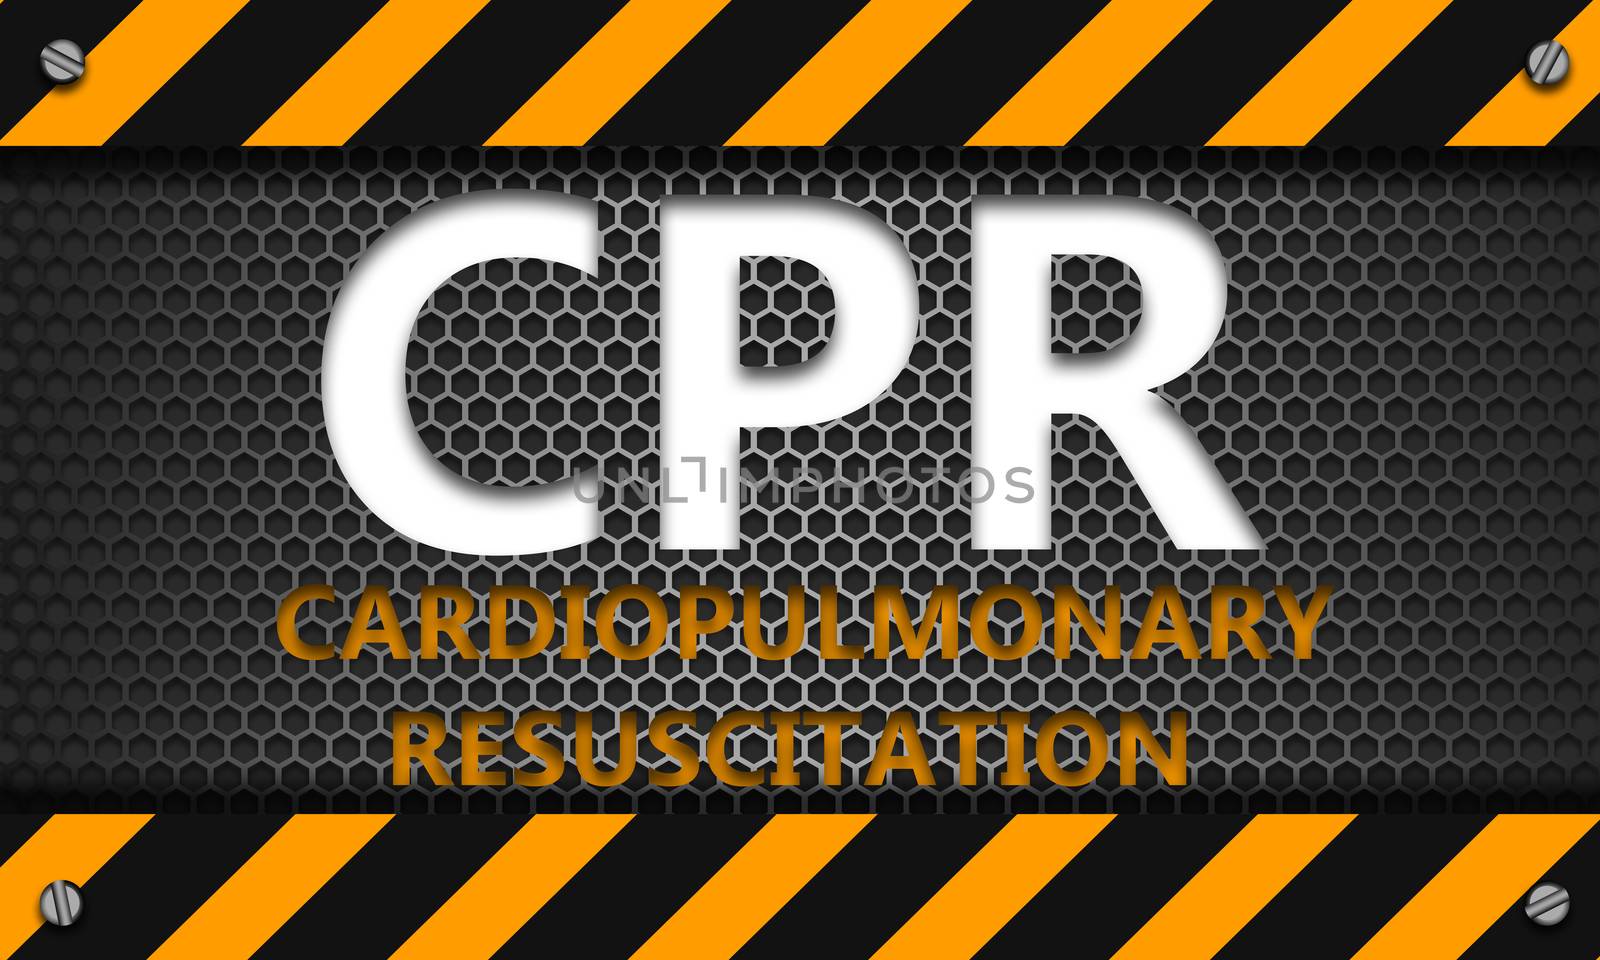 CPR - Cardiopulmonary Resuscitation concept on mesh hexagon background, 3d rendering